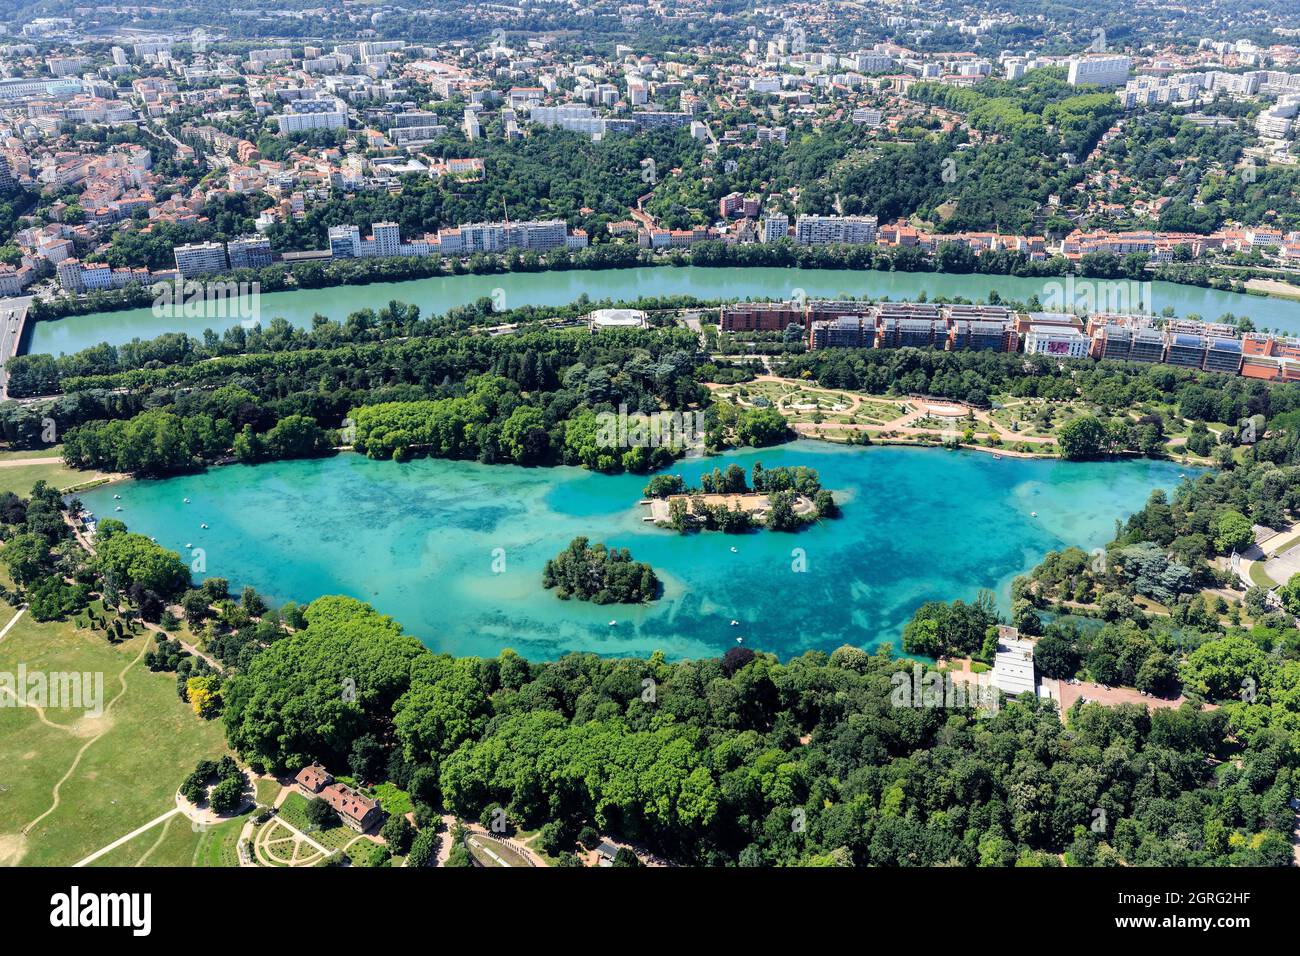 France, Rhone, Lyon, 6th arrondissement, les Brotteaux district, Tete d'Or park, Souvenir island on Tete d'Or lake, Rhone river in the background (aerial view) Stock Photo